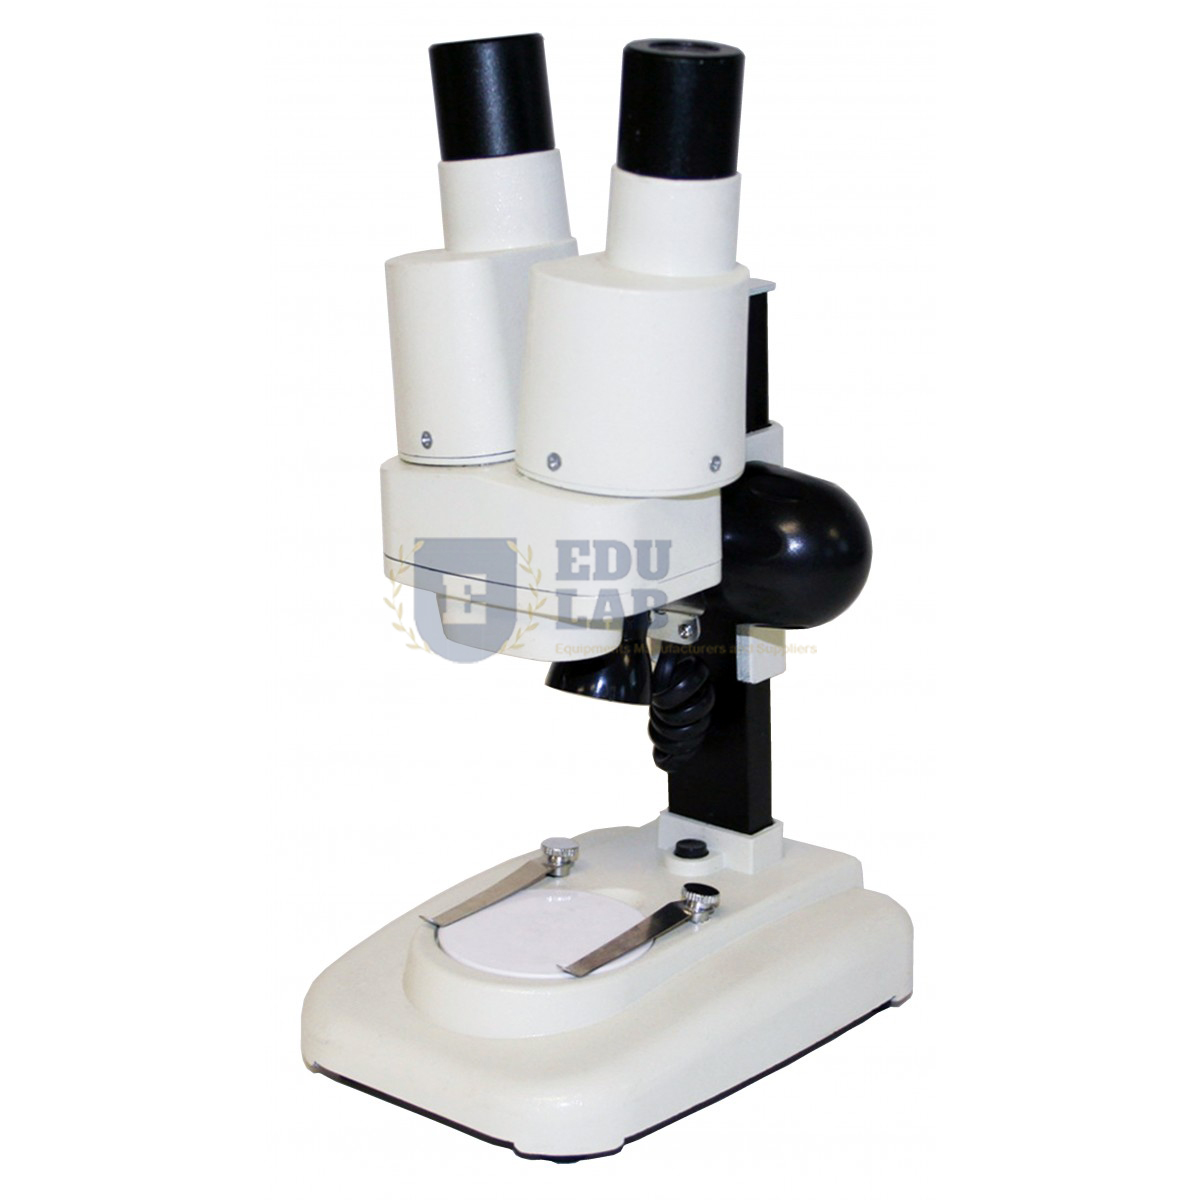 Plastic Stereo Microscope